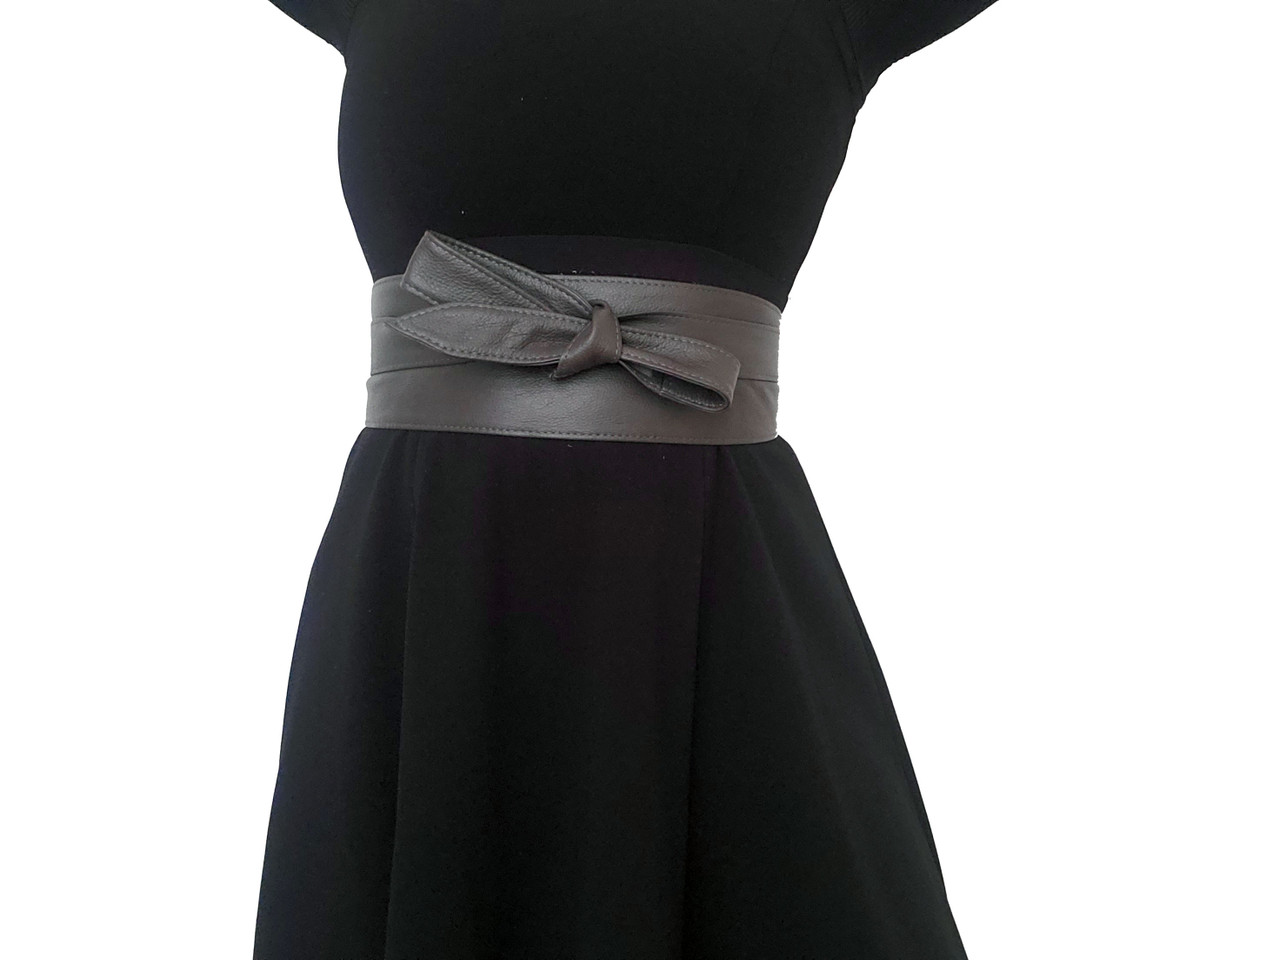 Stunning Wide Wrap Leather Obi Belt, Fashionable Casual Dress